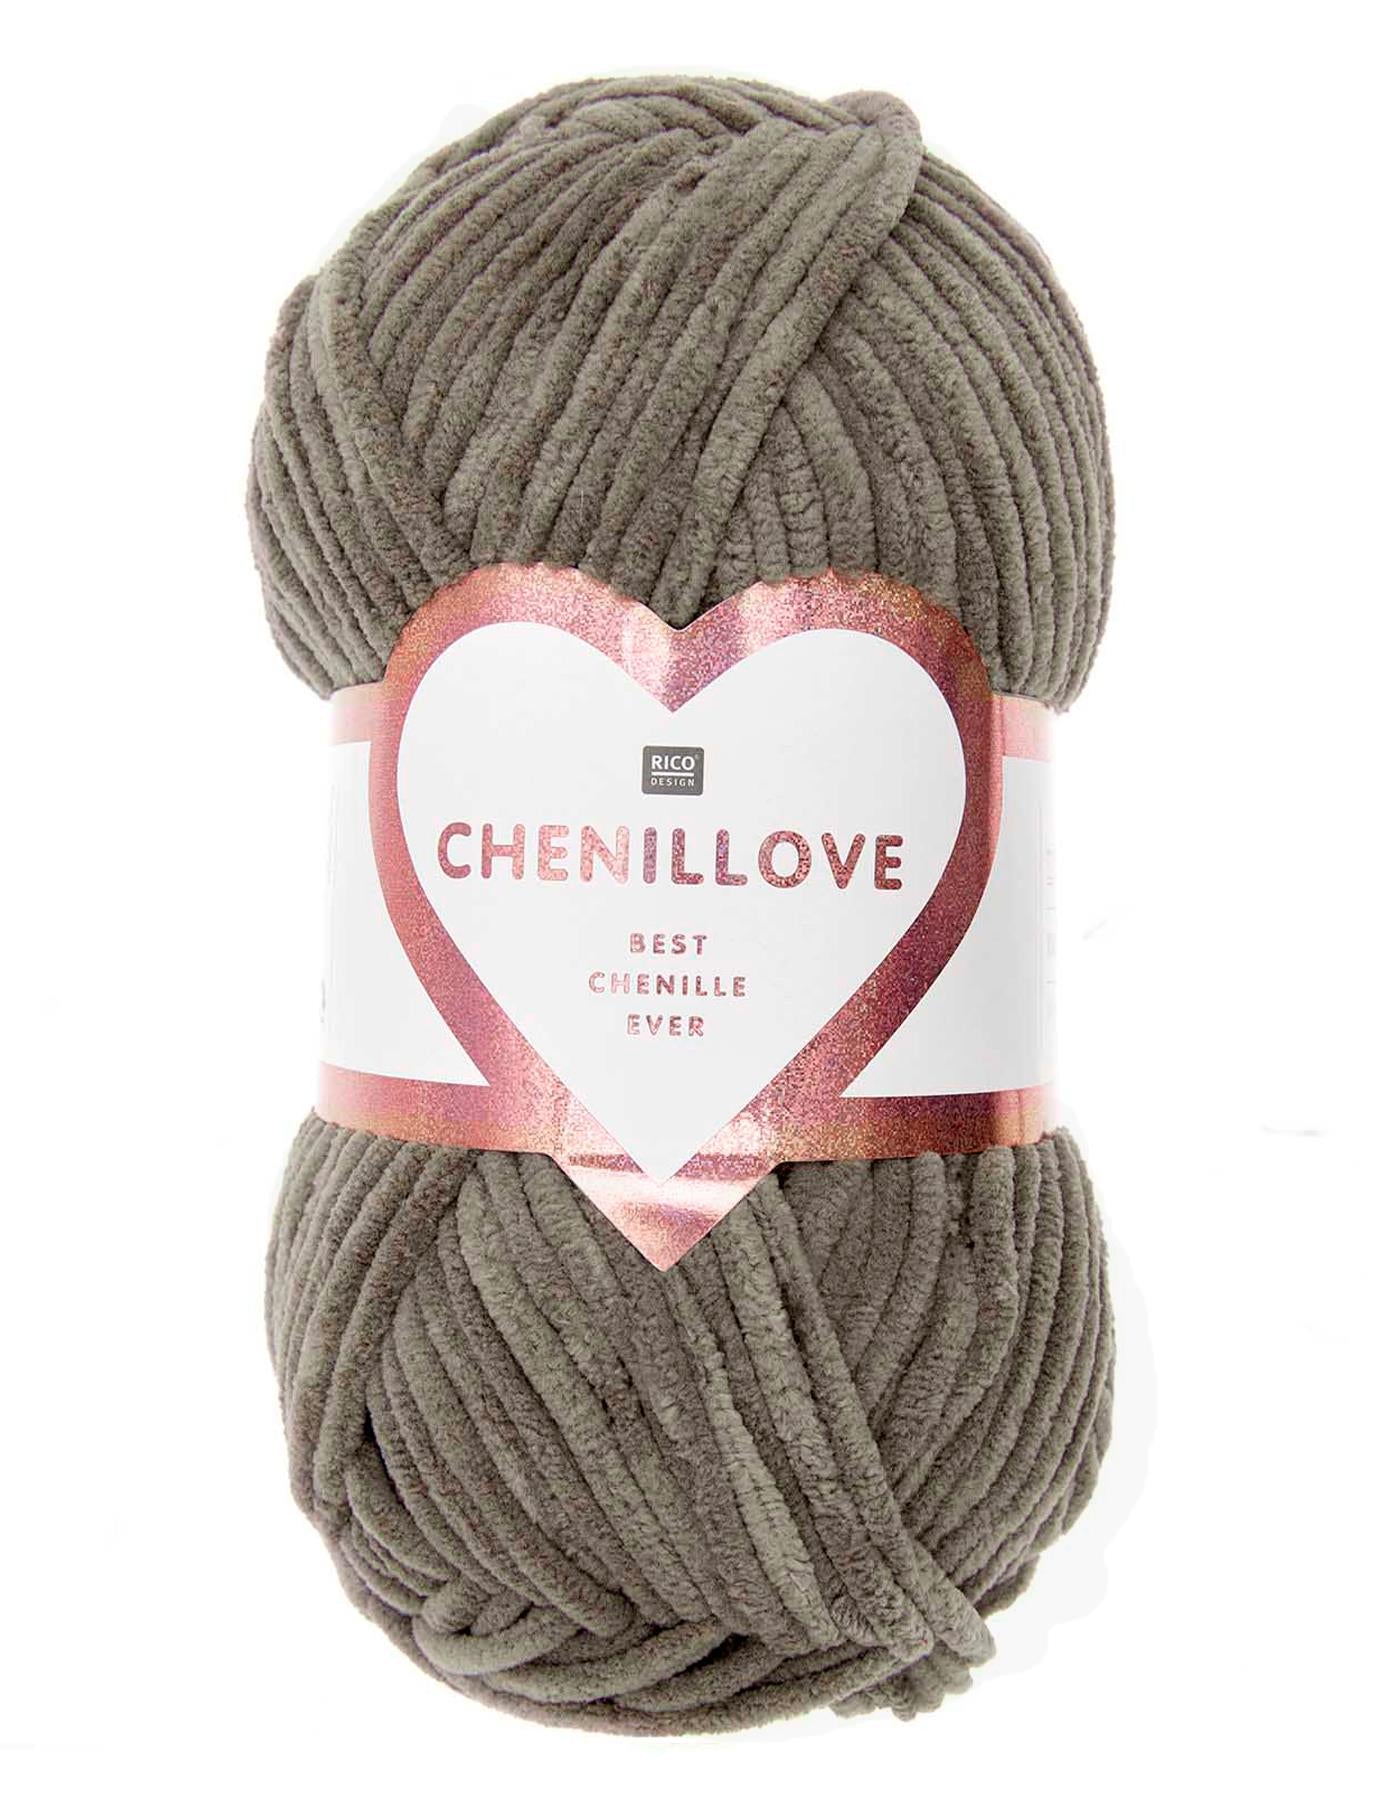 RICO Chenillove Brown (012) chenille yarn - 100g